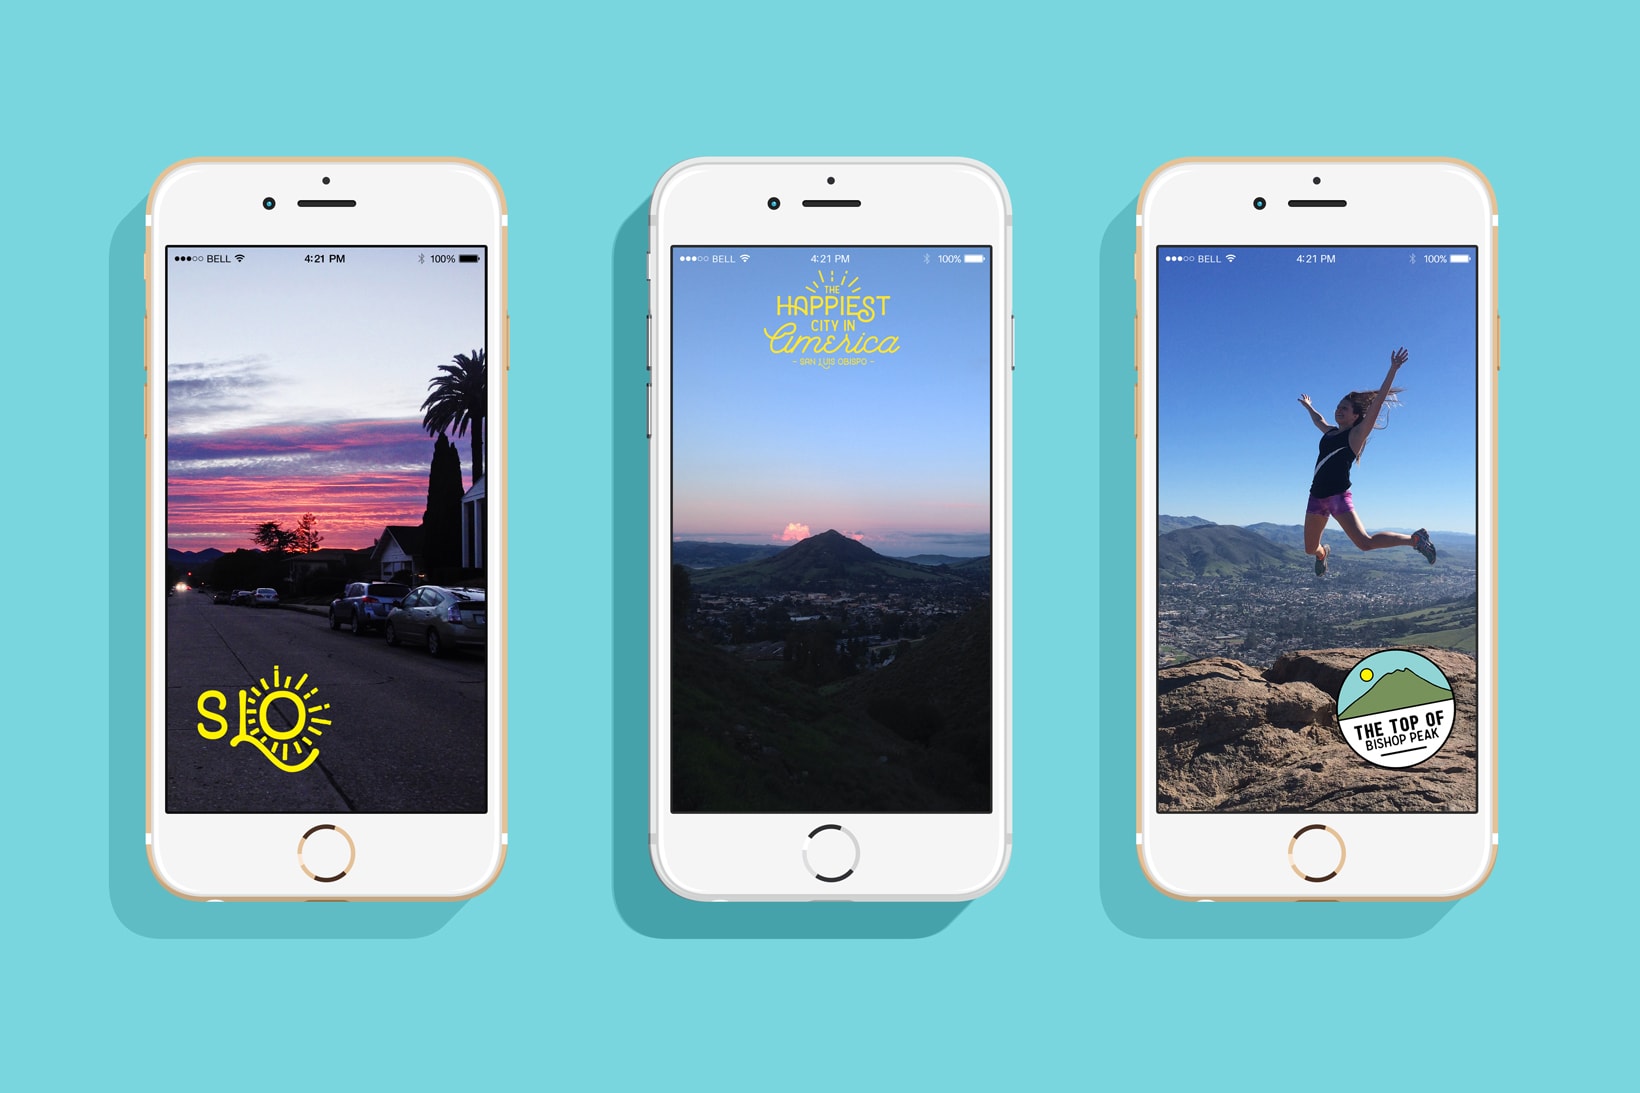 Snapchat Geofilter Patent 7.7 Million Mobli Snap